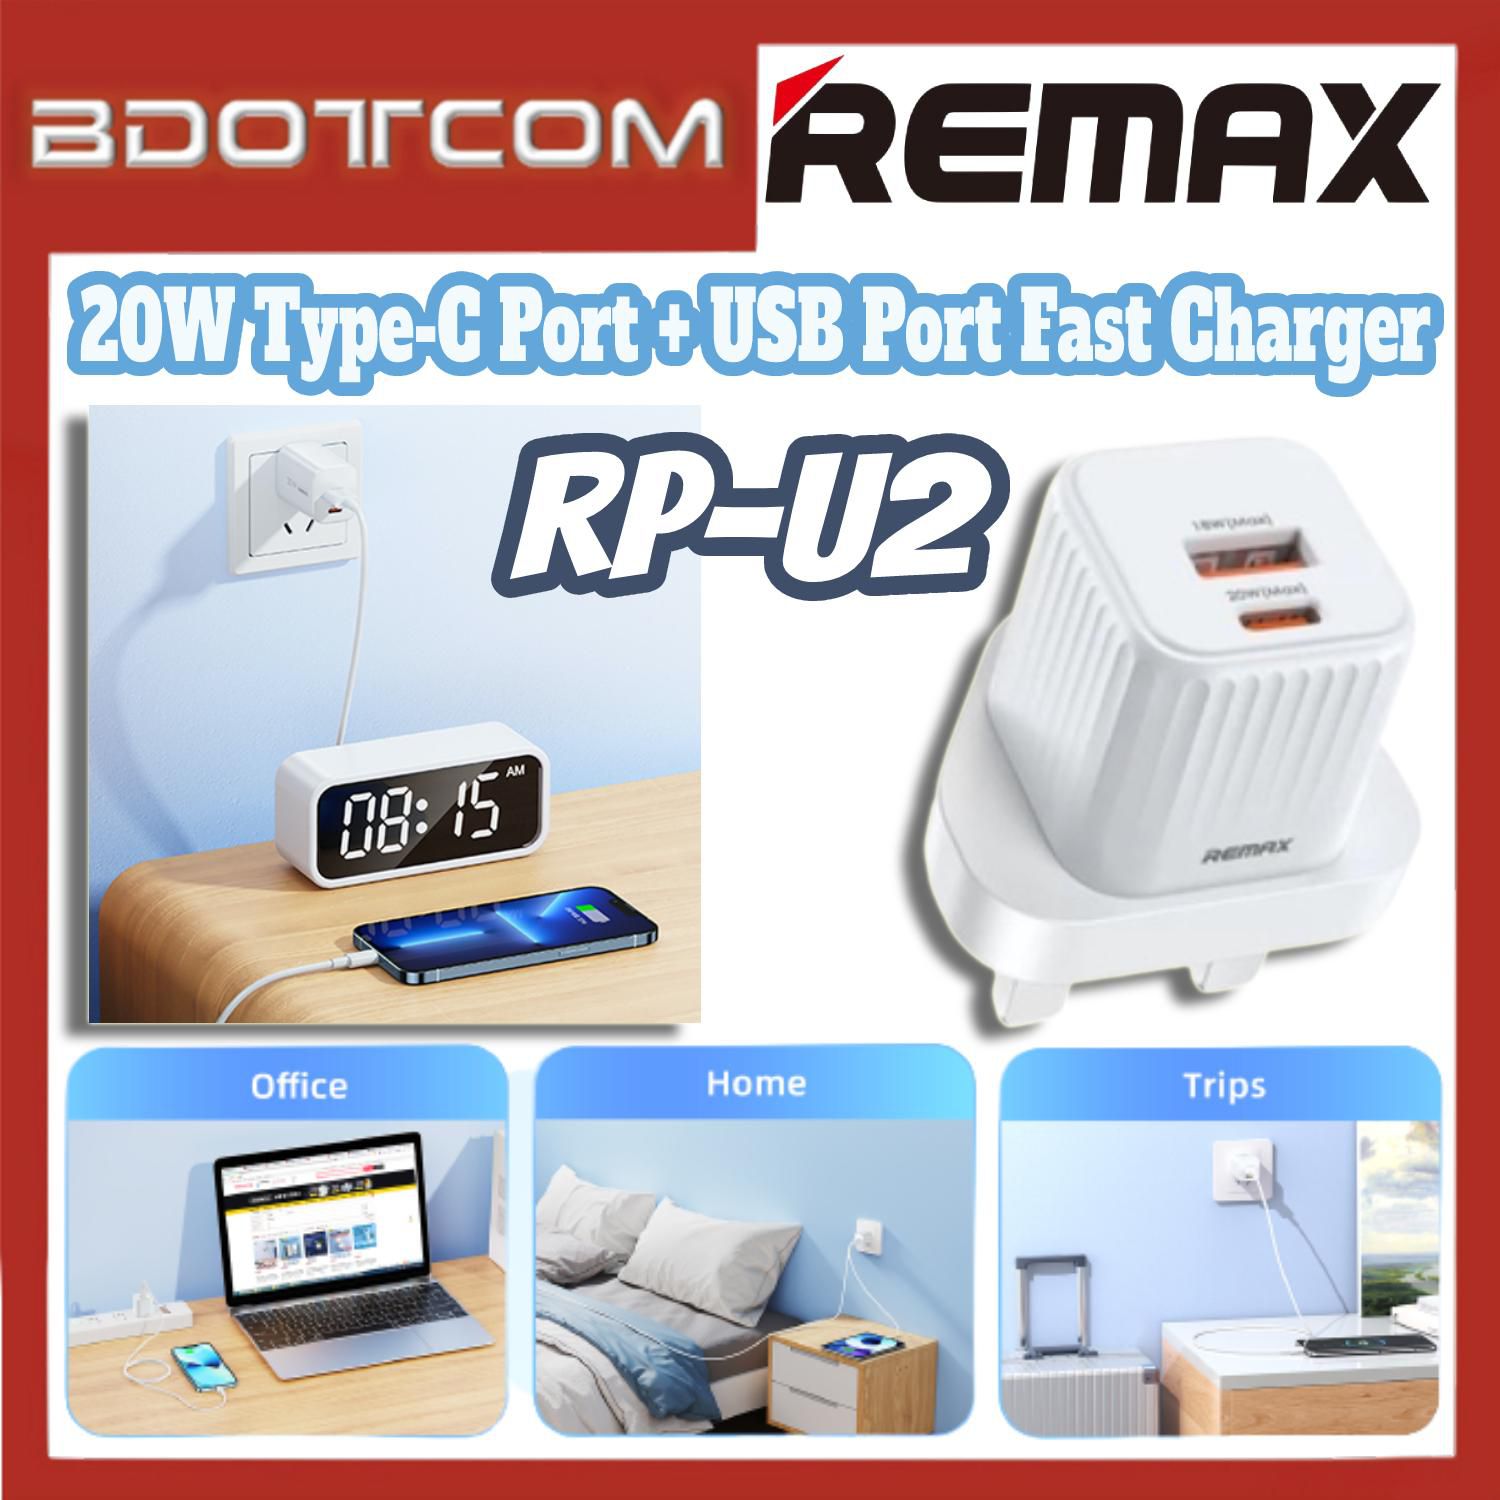 Remax RP-U2 Jaker Series 20W Type-C Port + USB Port Charger (UK Plug)